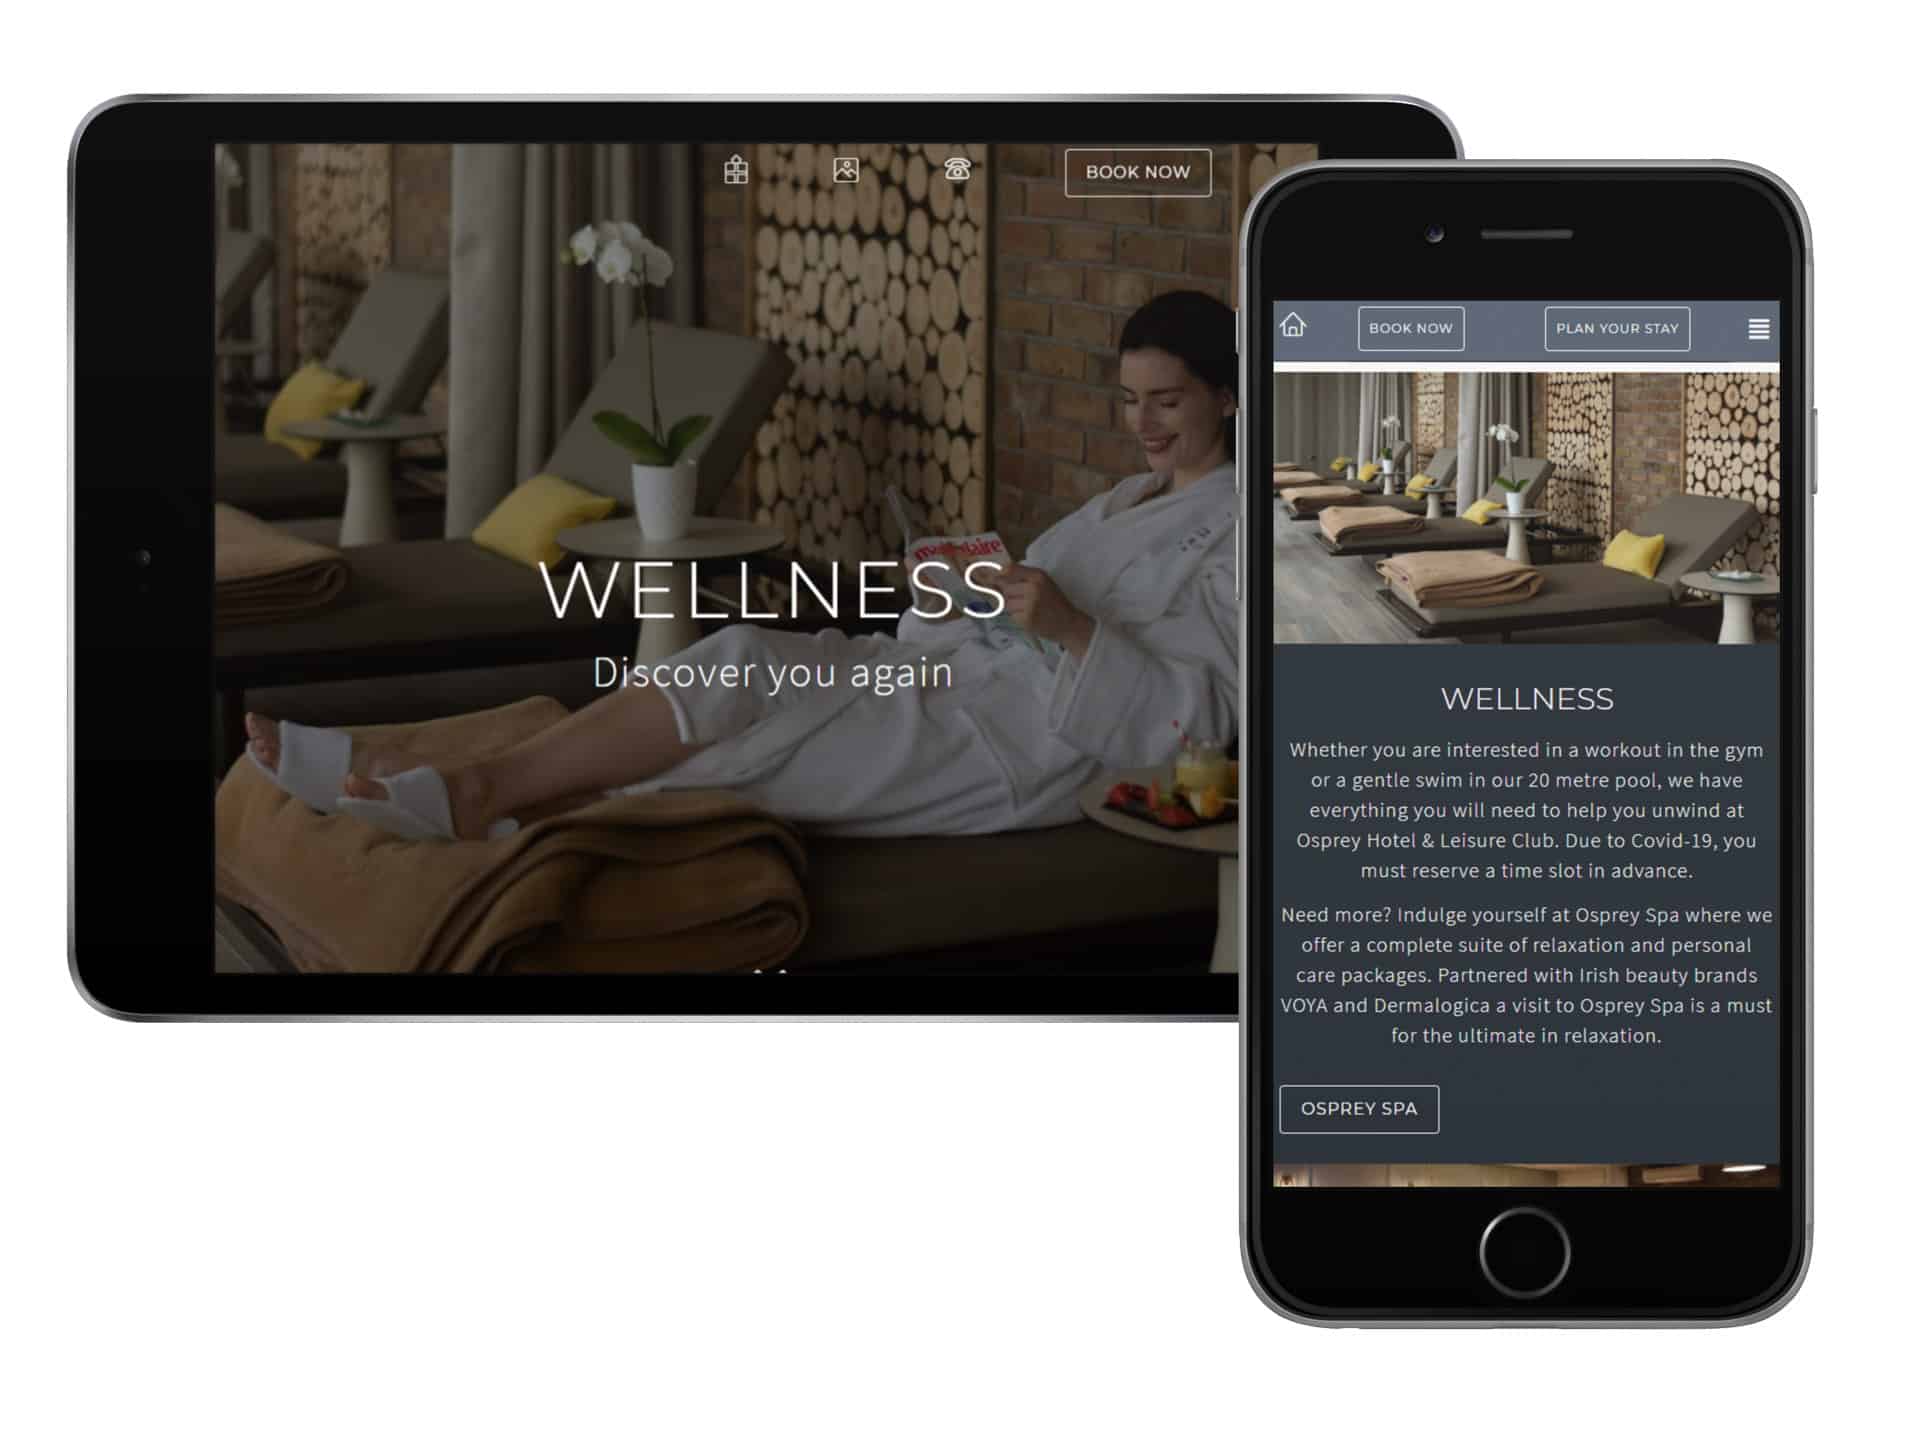 Osprey Hotel Spa Wellness Website Design By Sprint Digital Marketing Agency